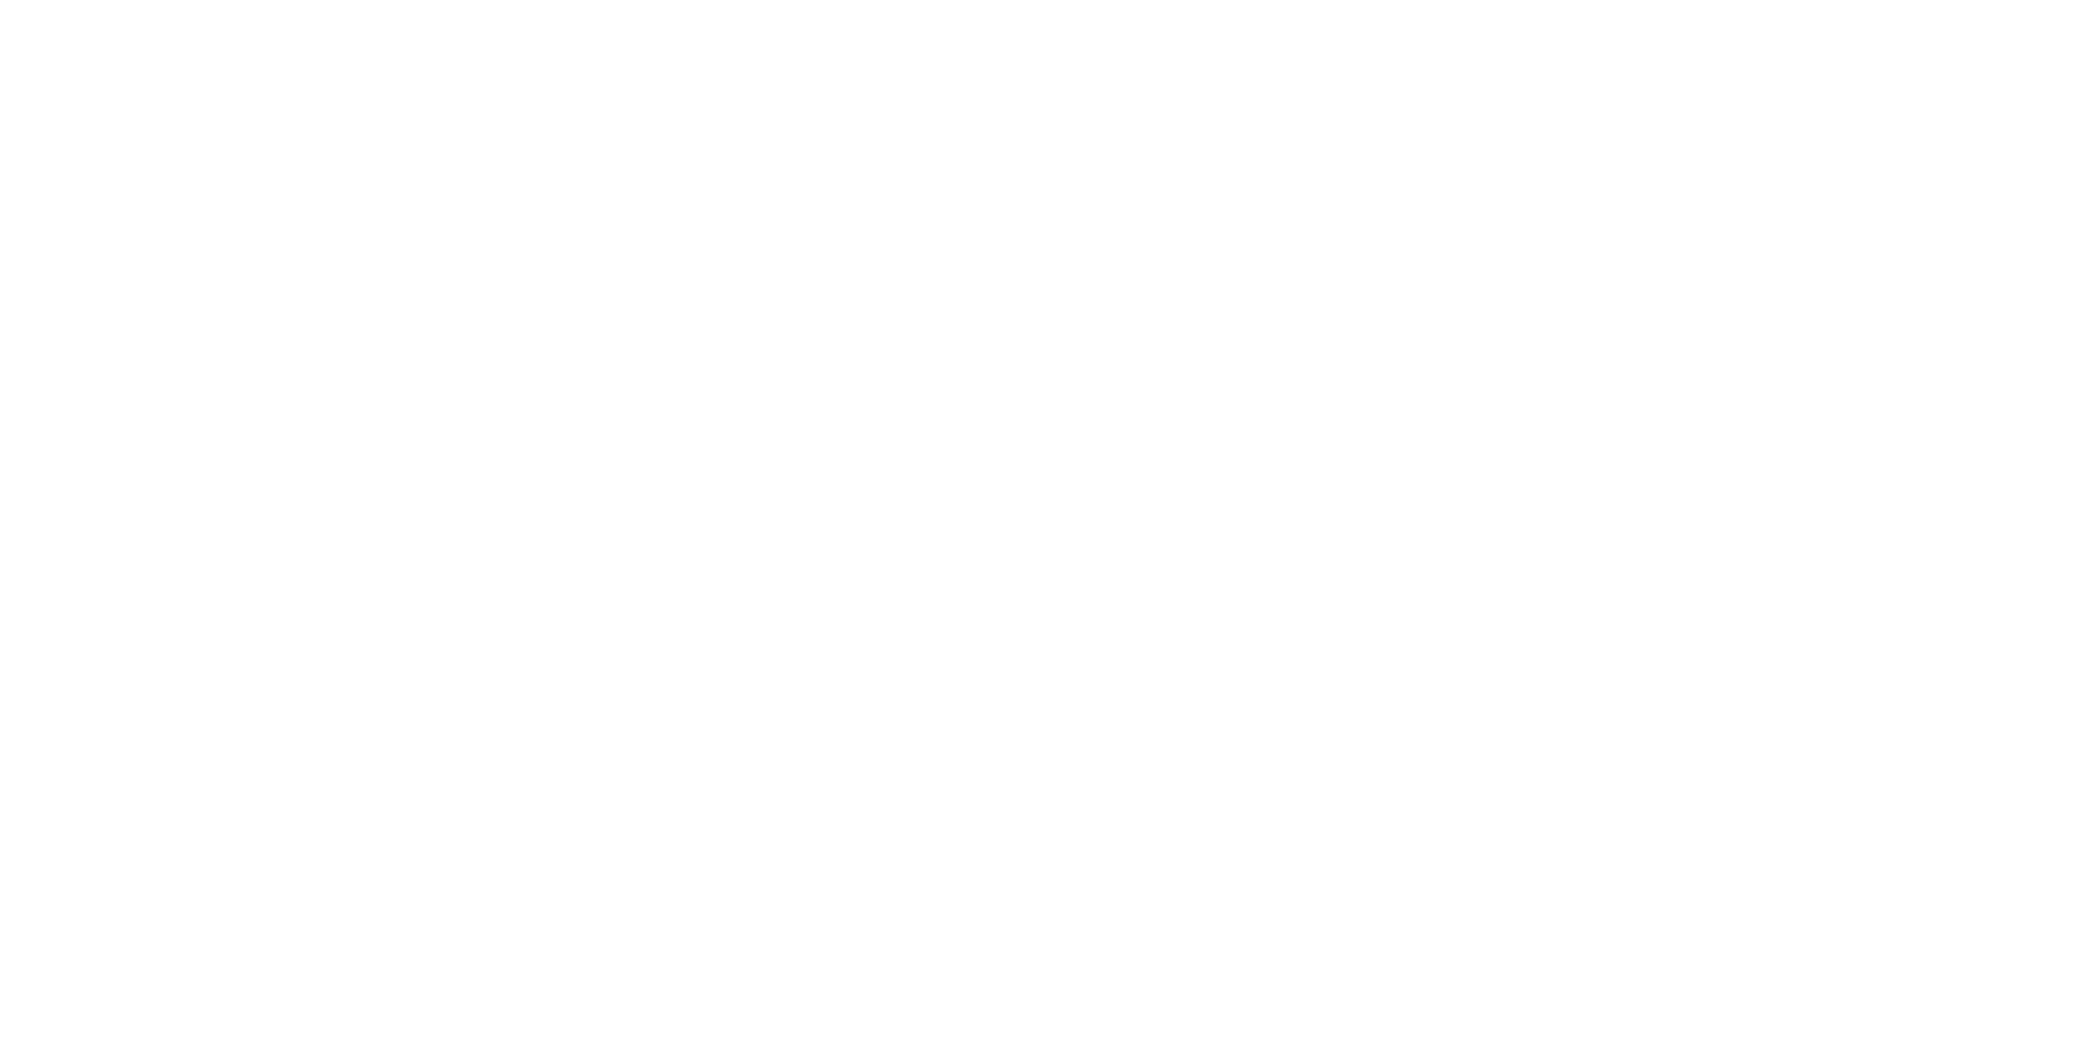 logo Anton Paar